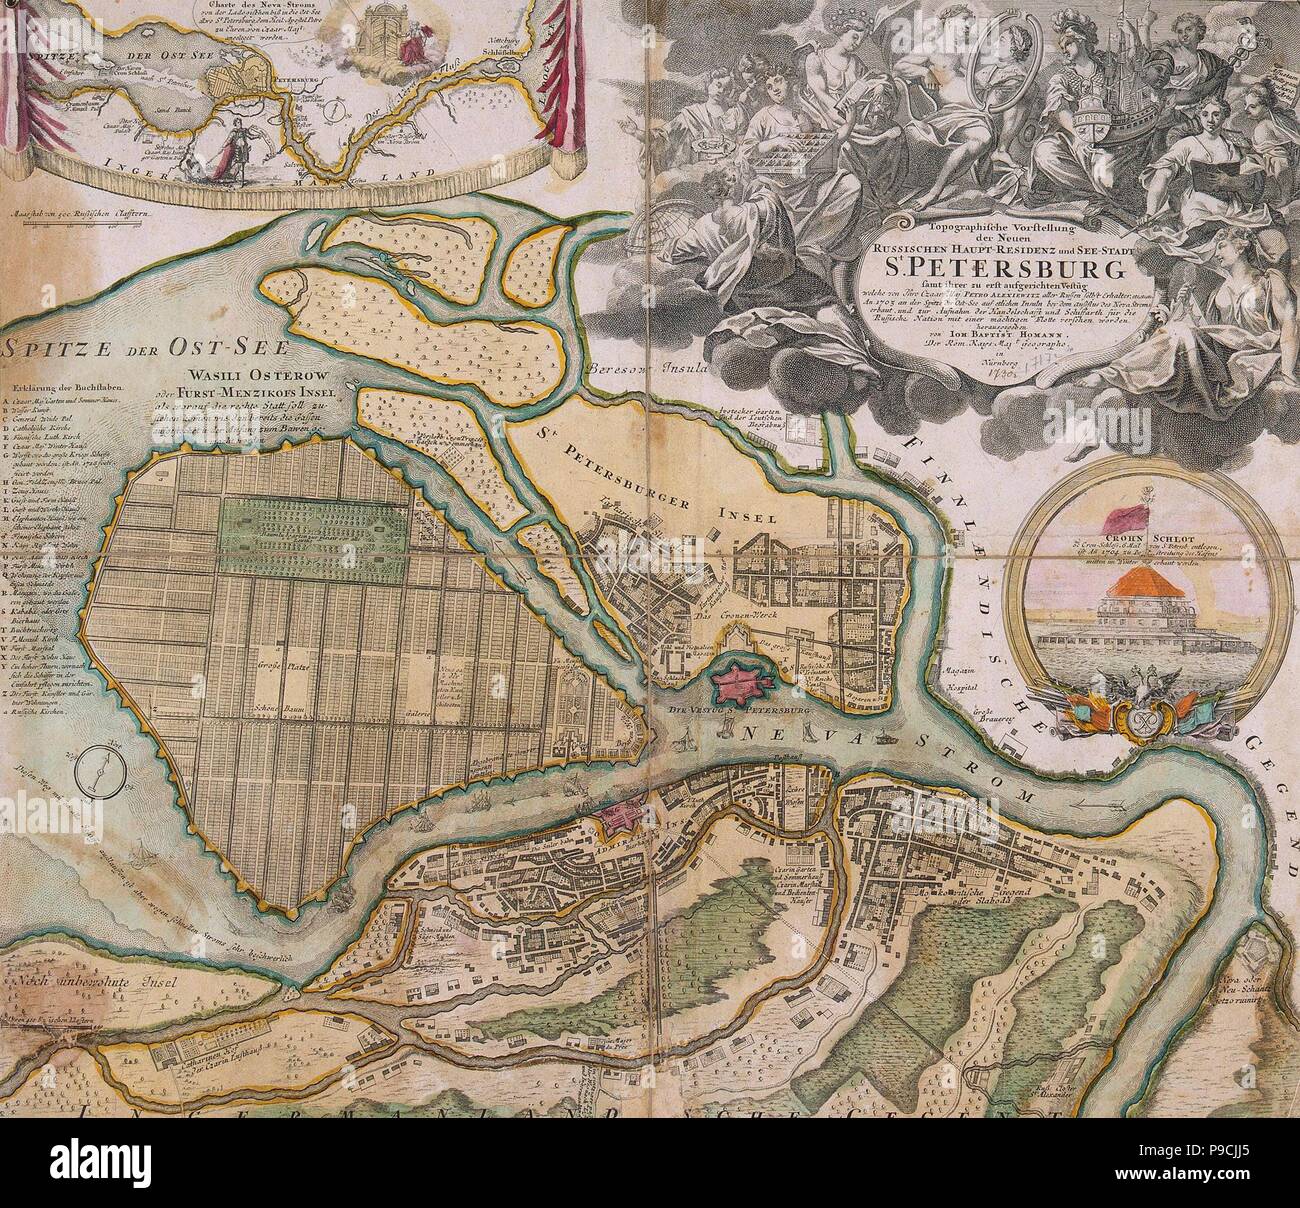 Karte von Petersburg (Sankt Petersburg Master Plan). Museum: Staatliche Eremitage, St. Petersburg. Stockfoto